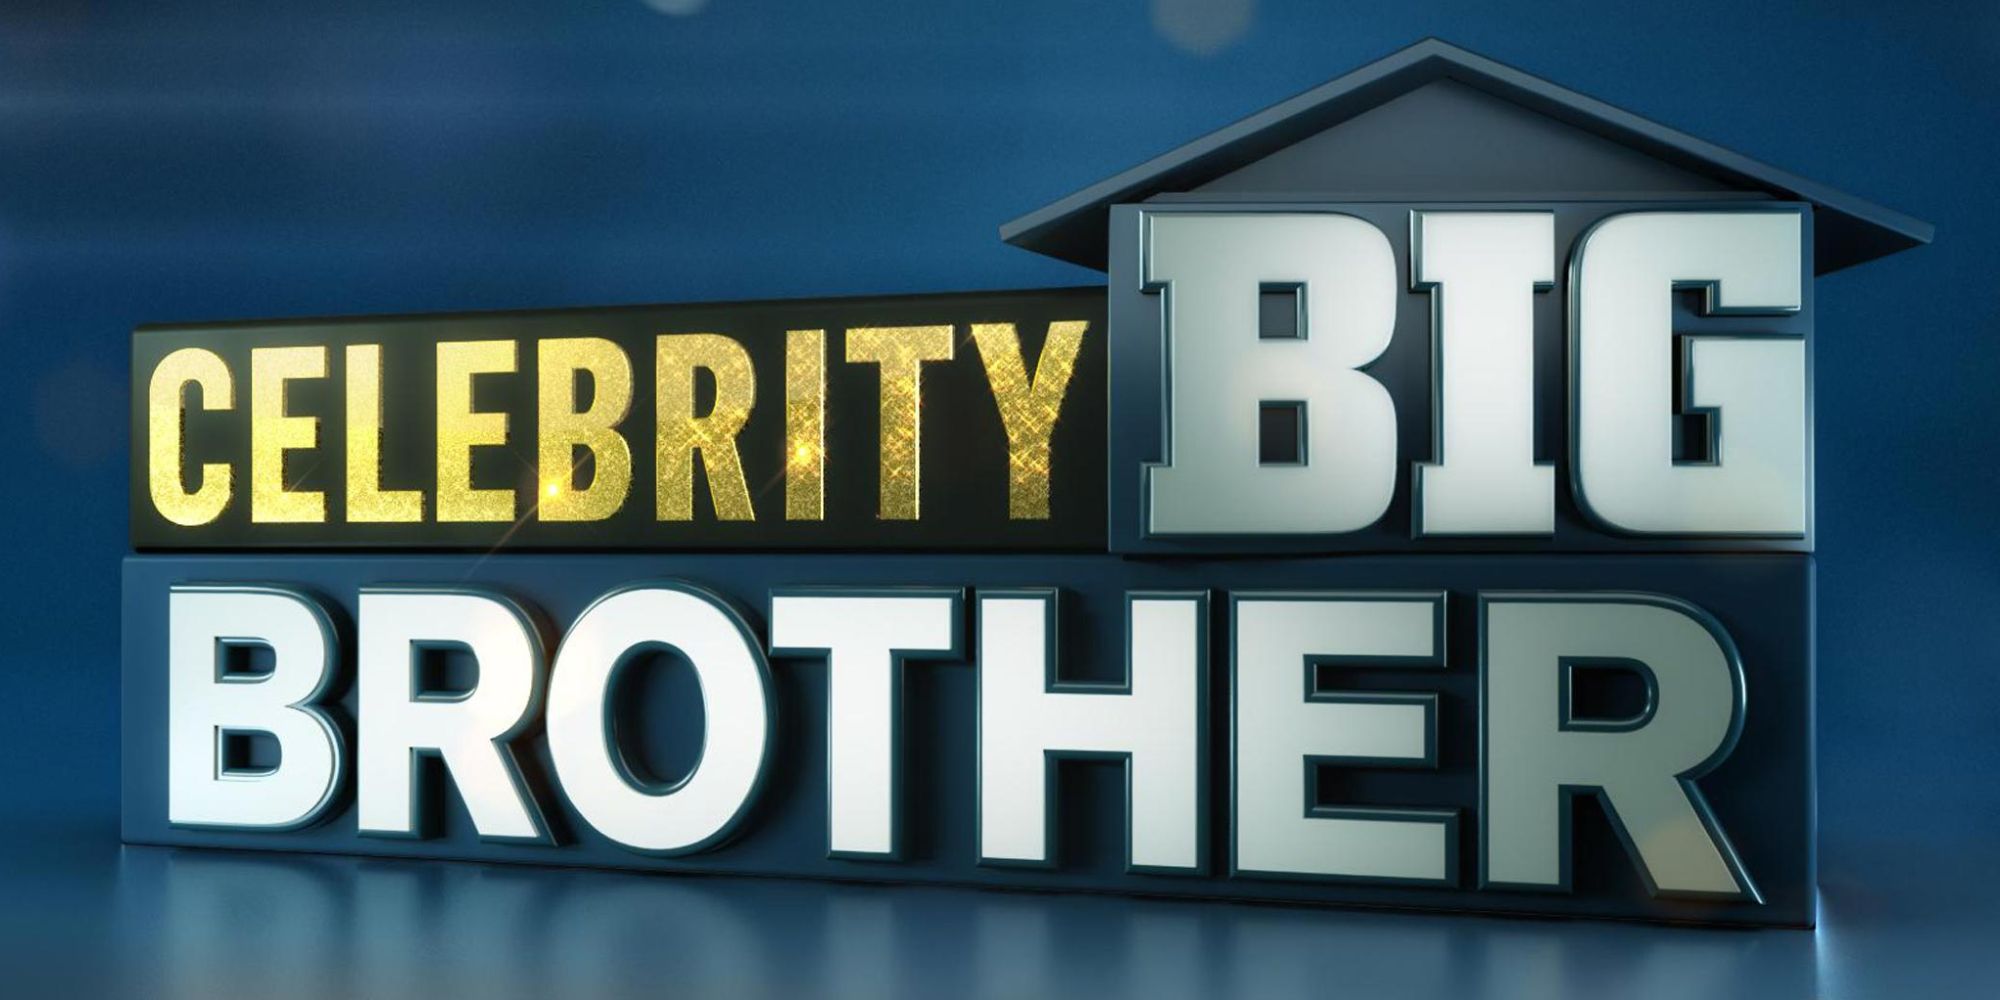 The Celebrity Big Brother logo